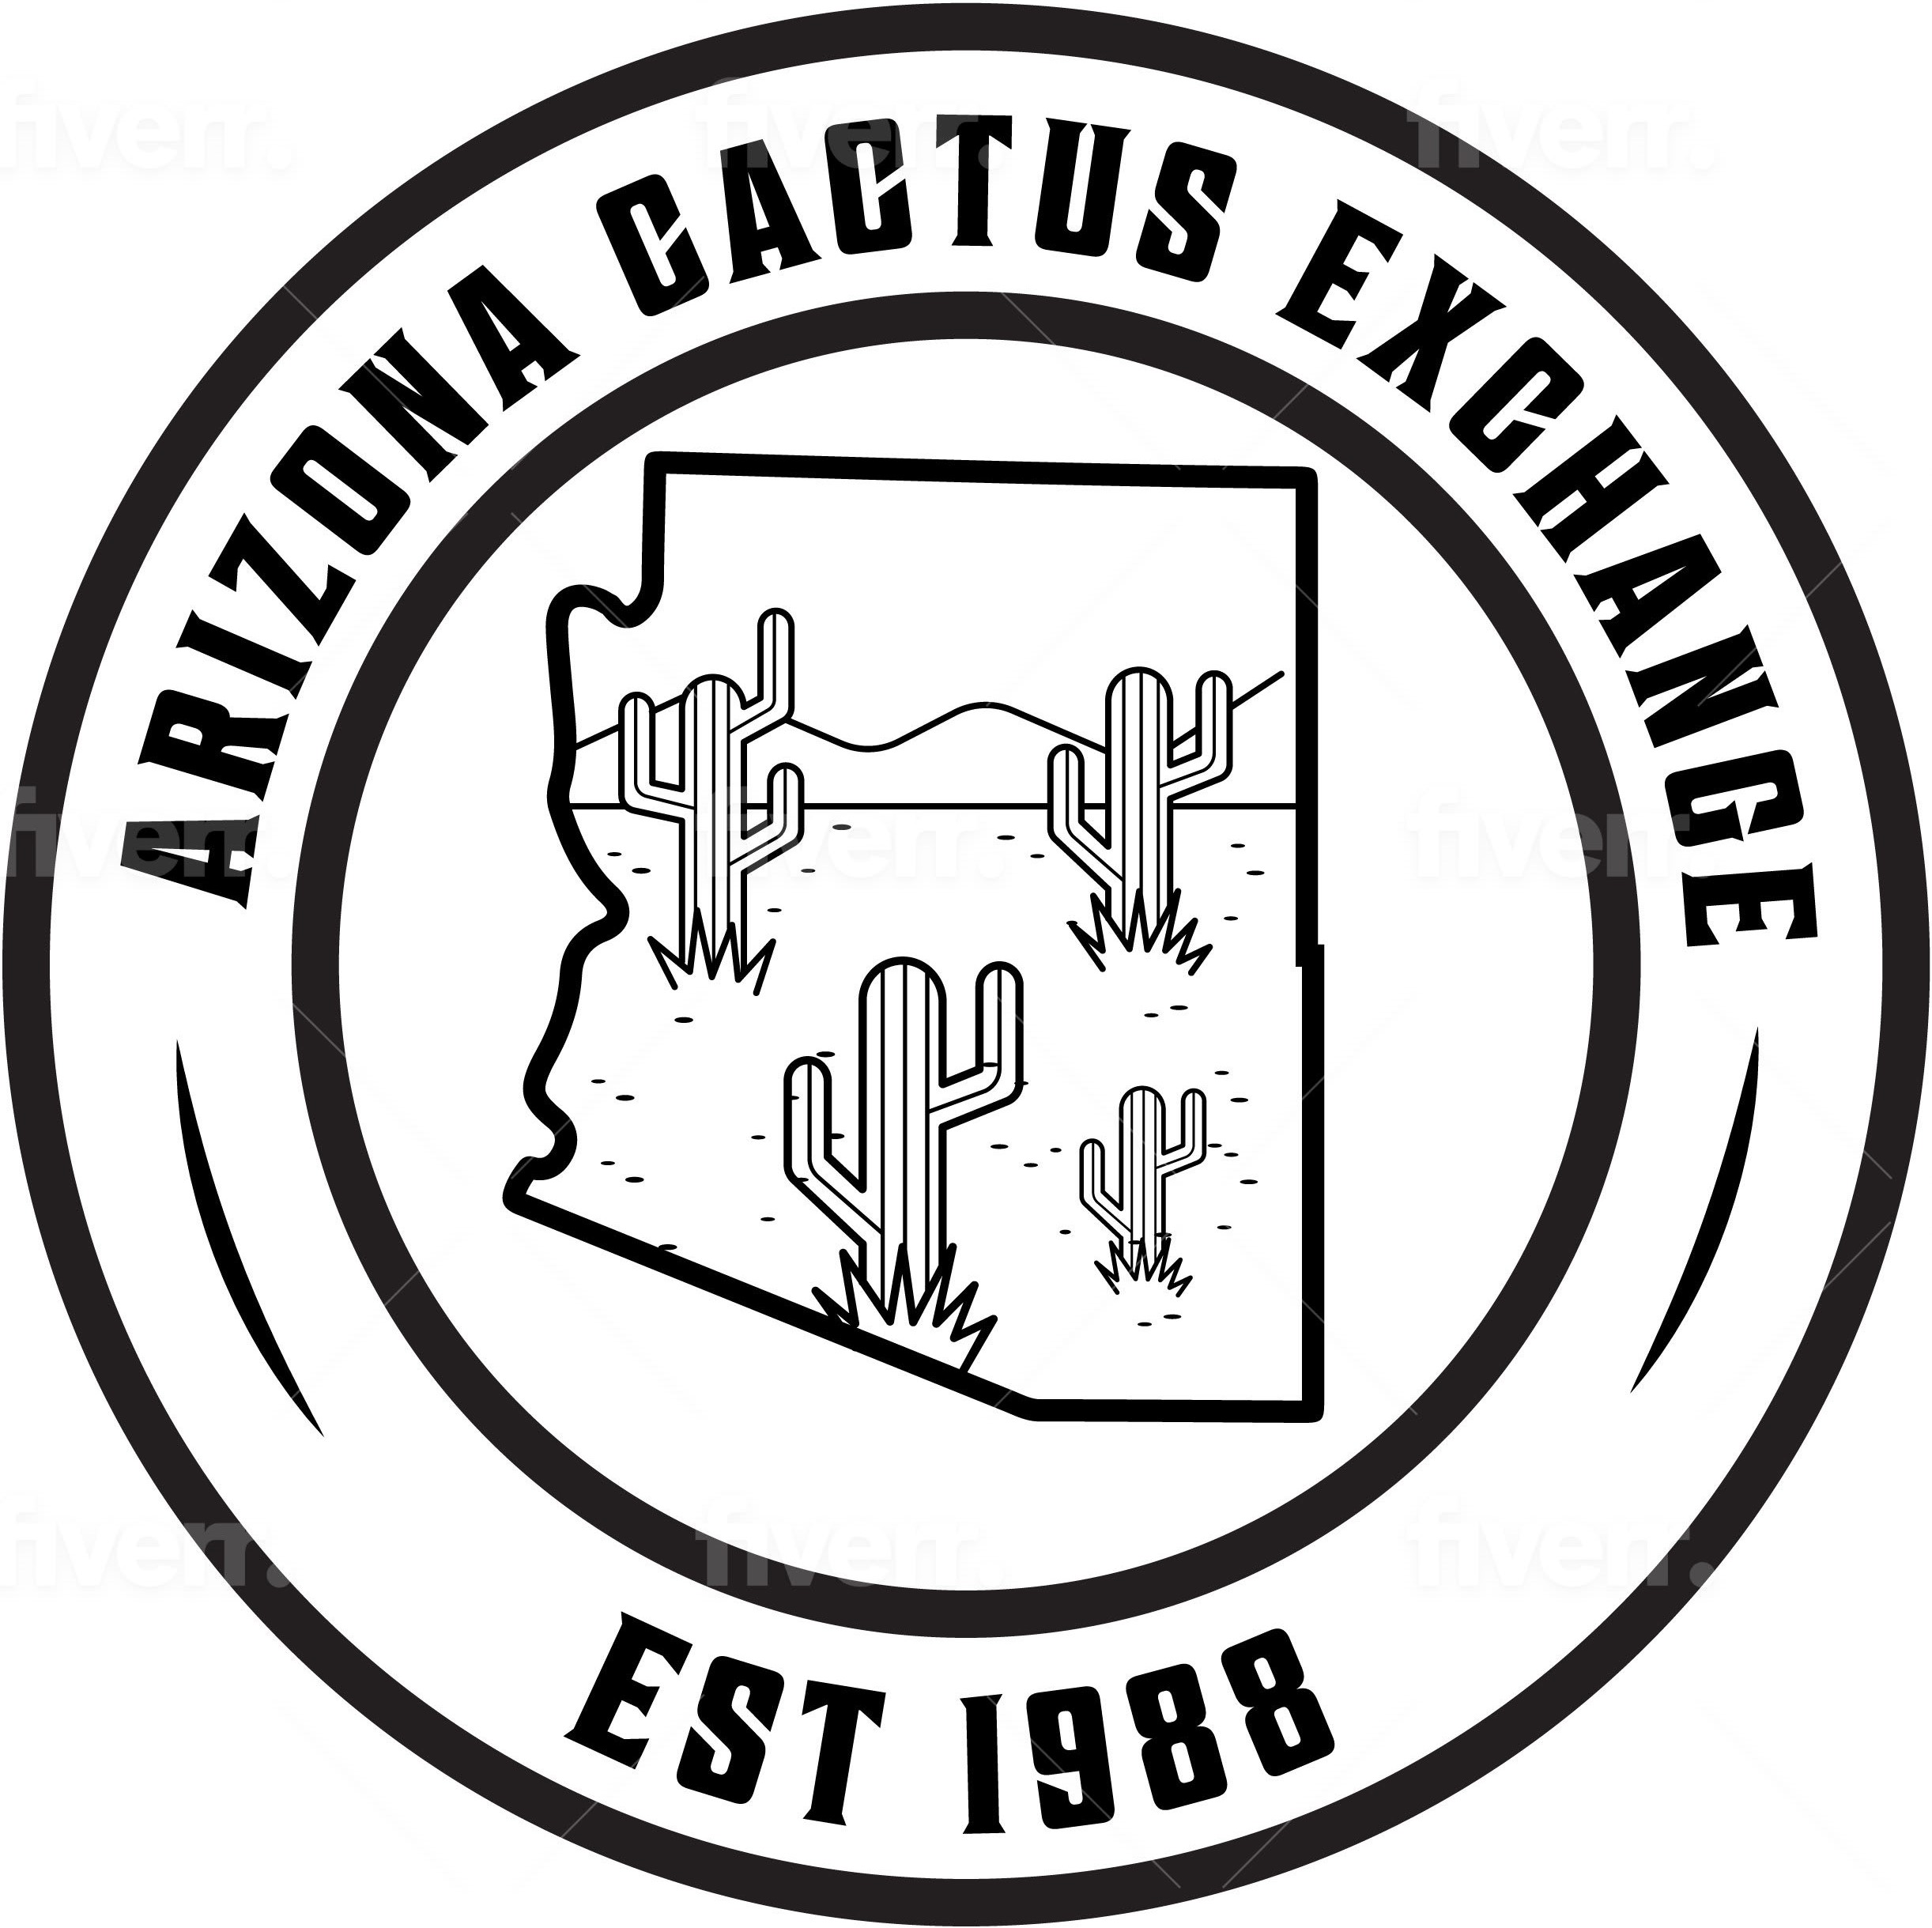 Arizona Cactus Exchange